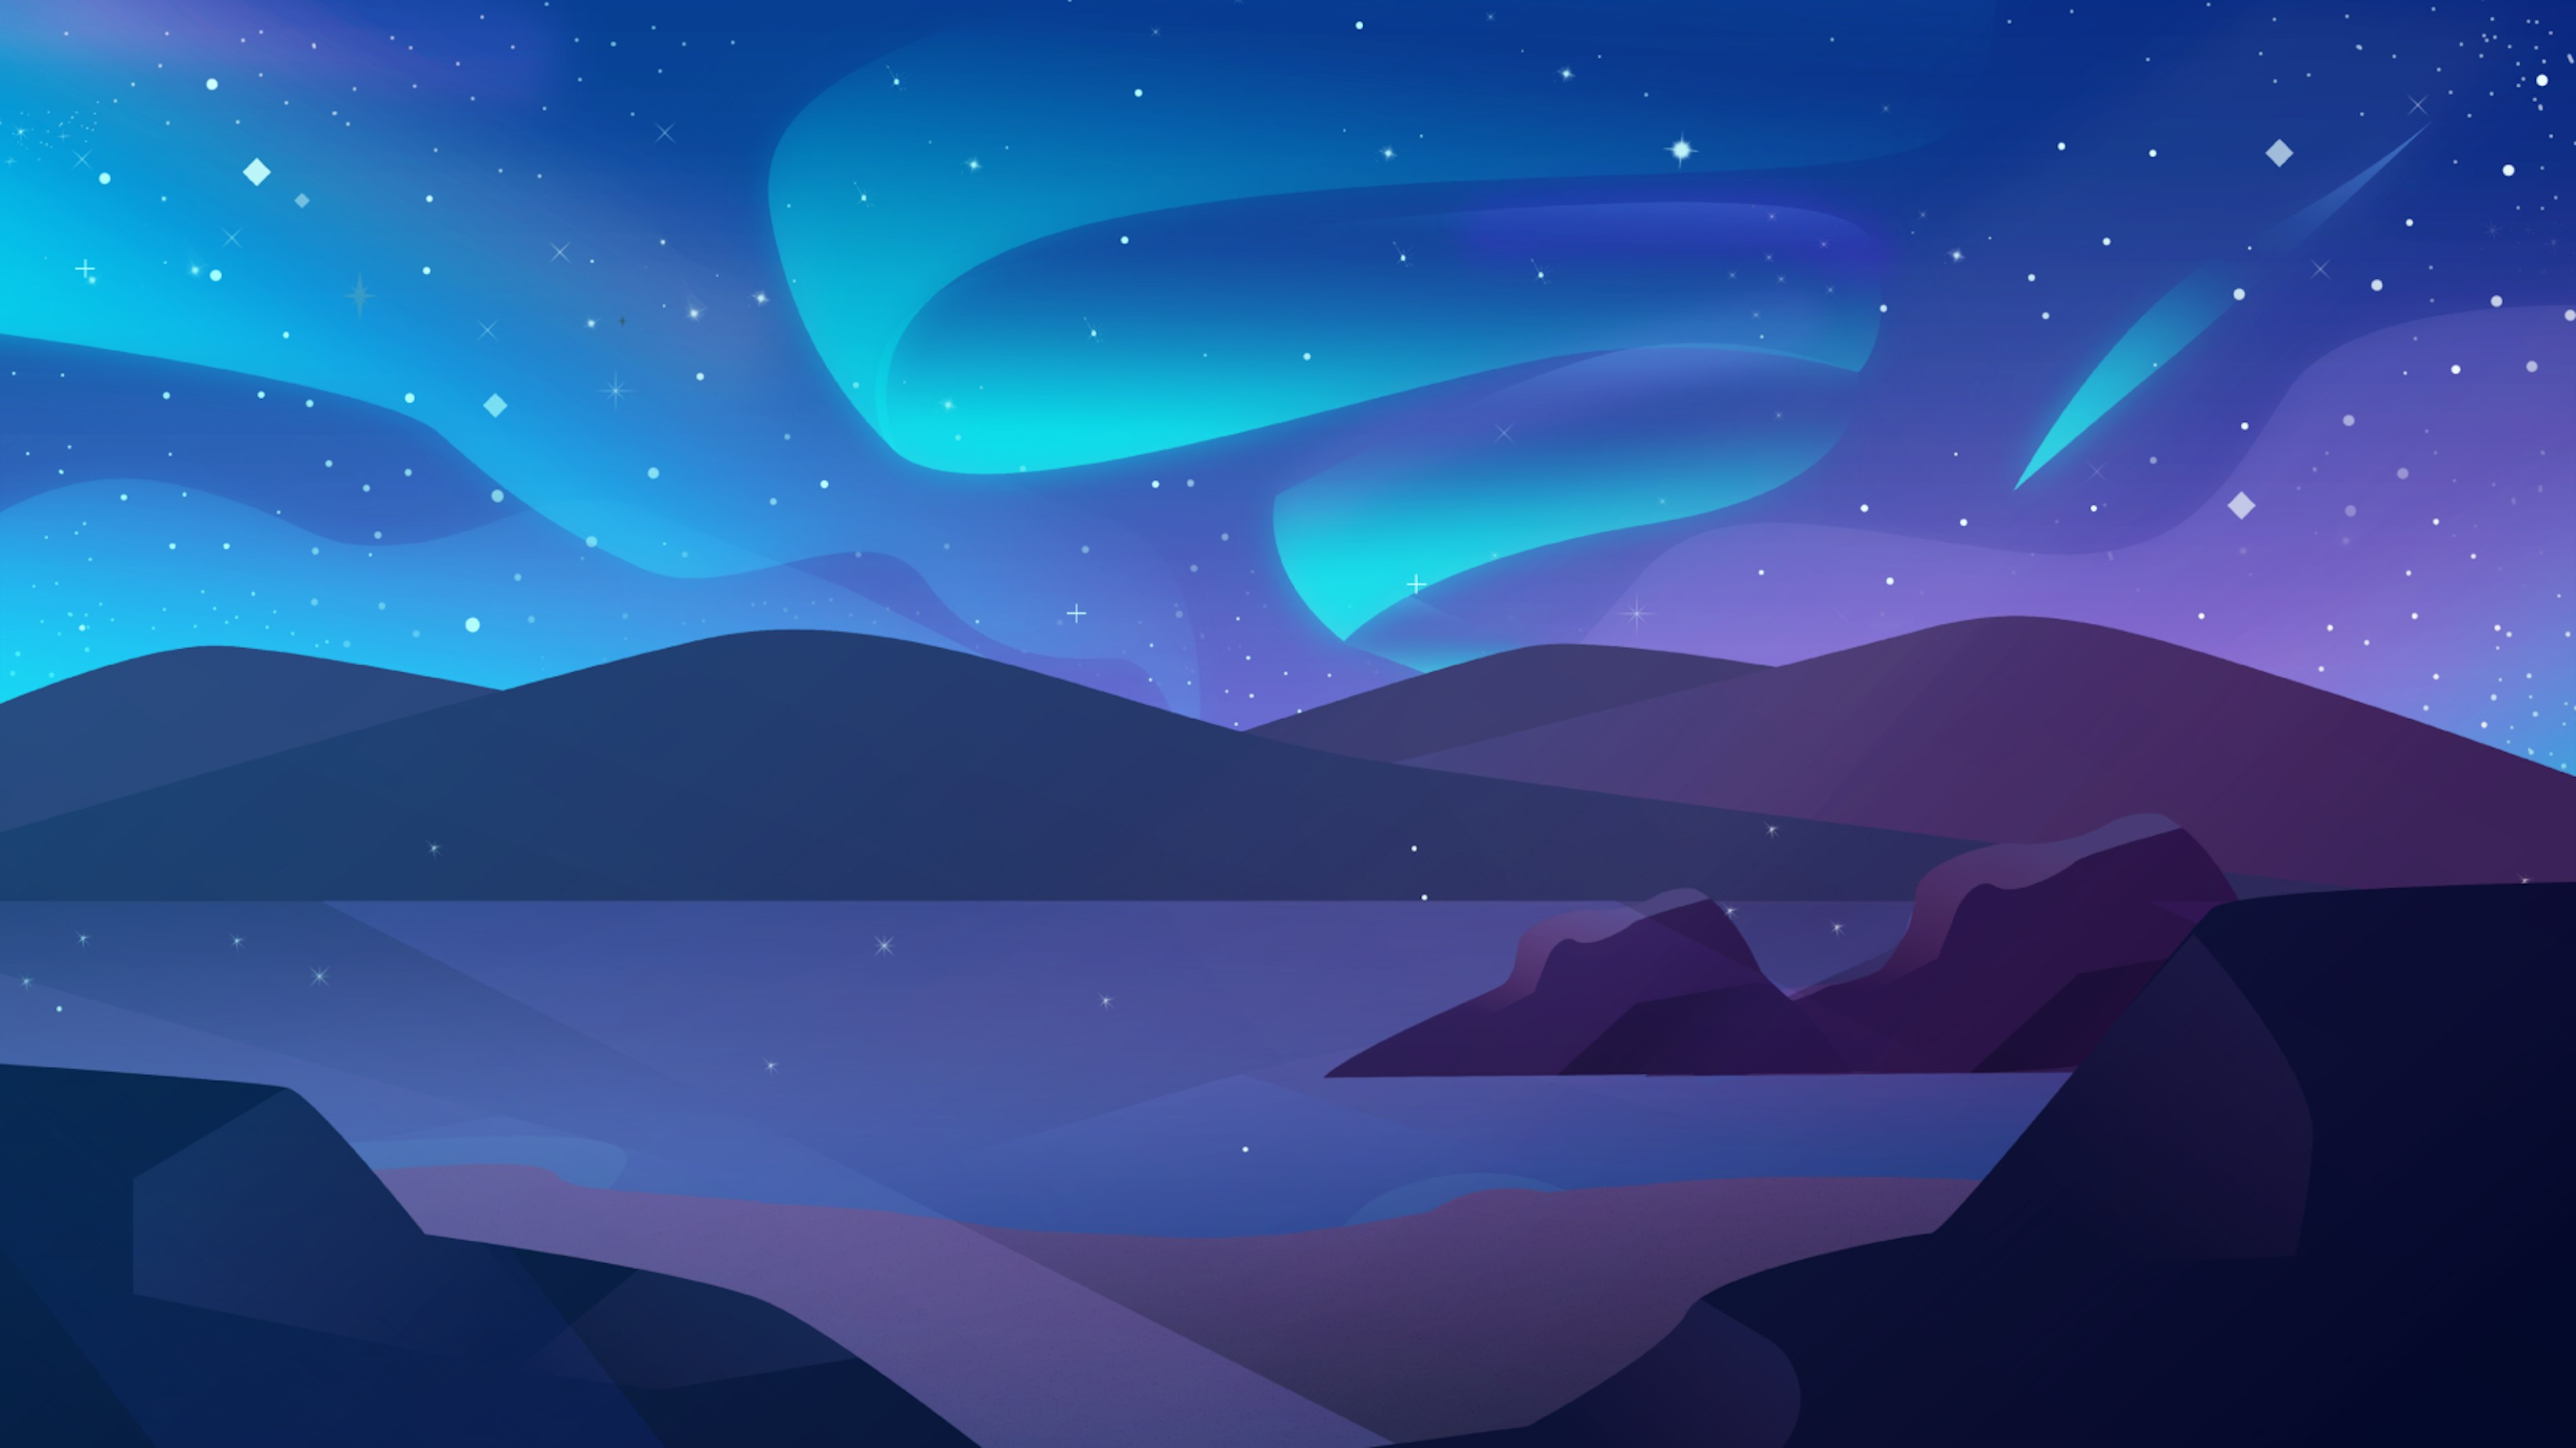 Free Art - Starry night sky - Mixkit